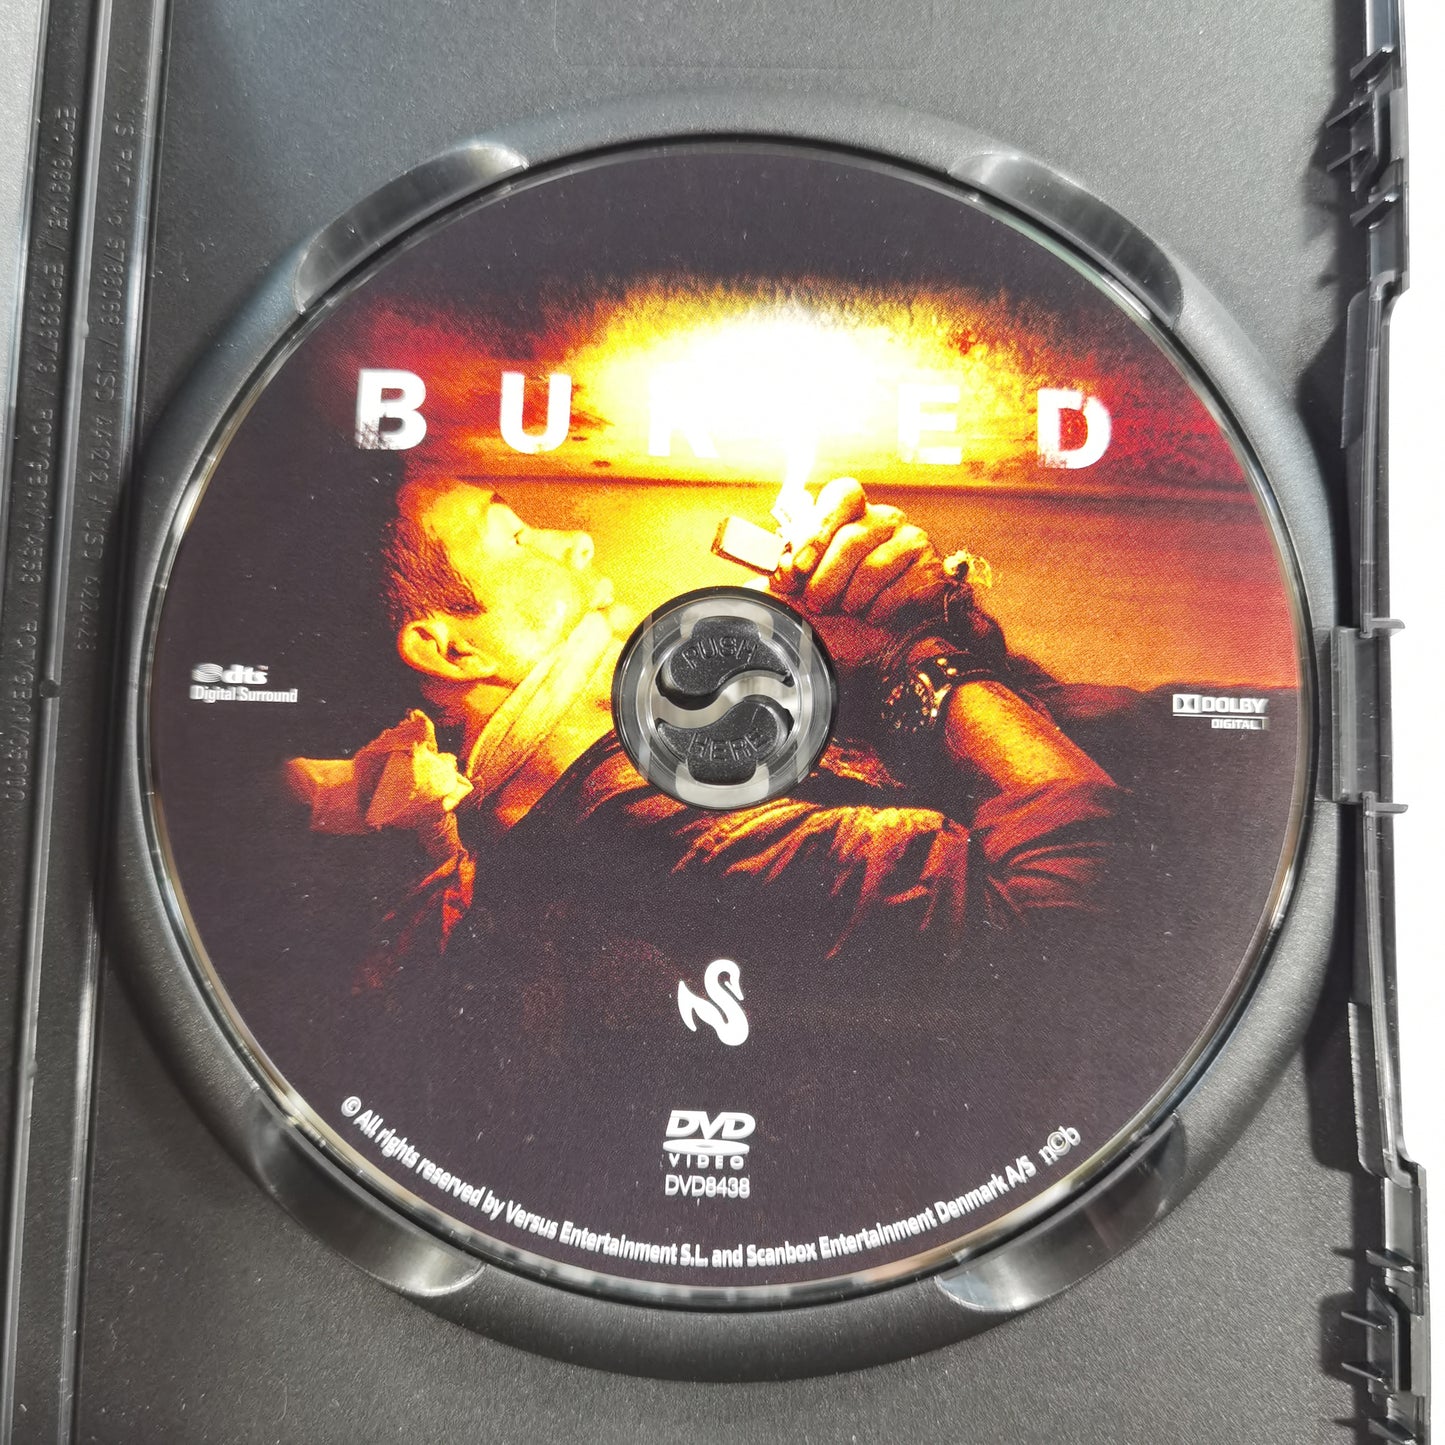 Buried (2010) - DVD SE NO DK FI